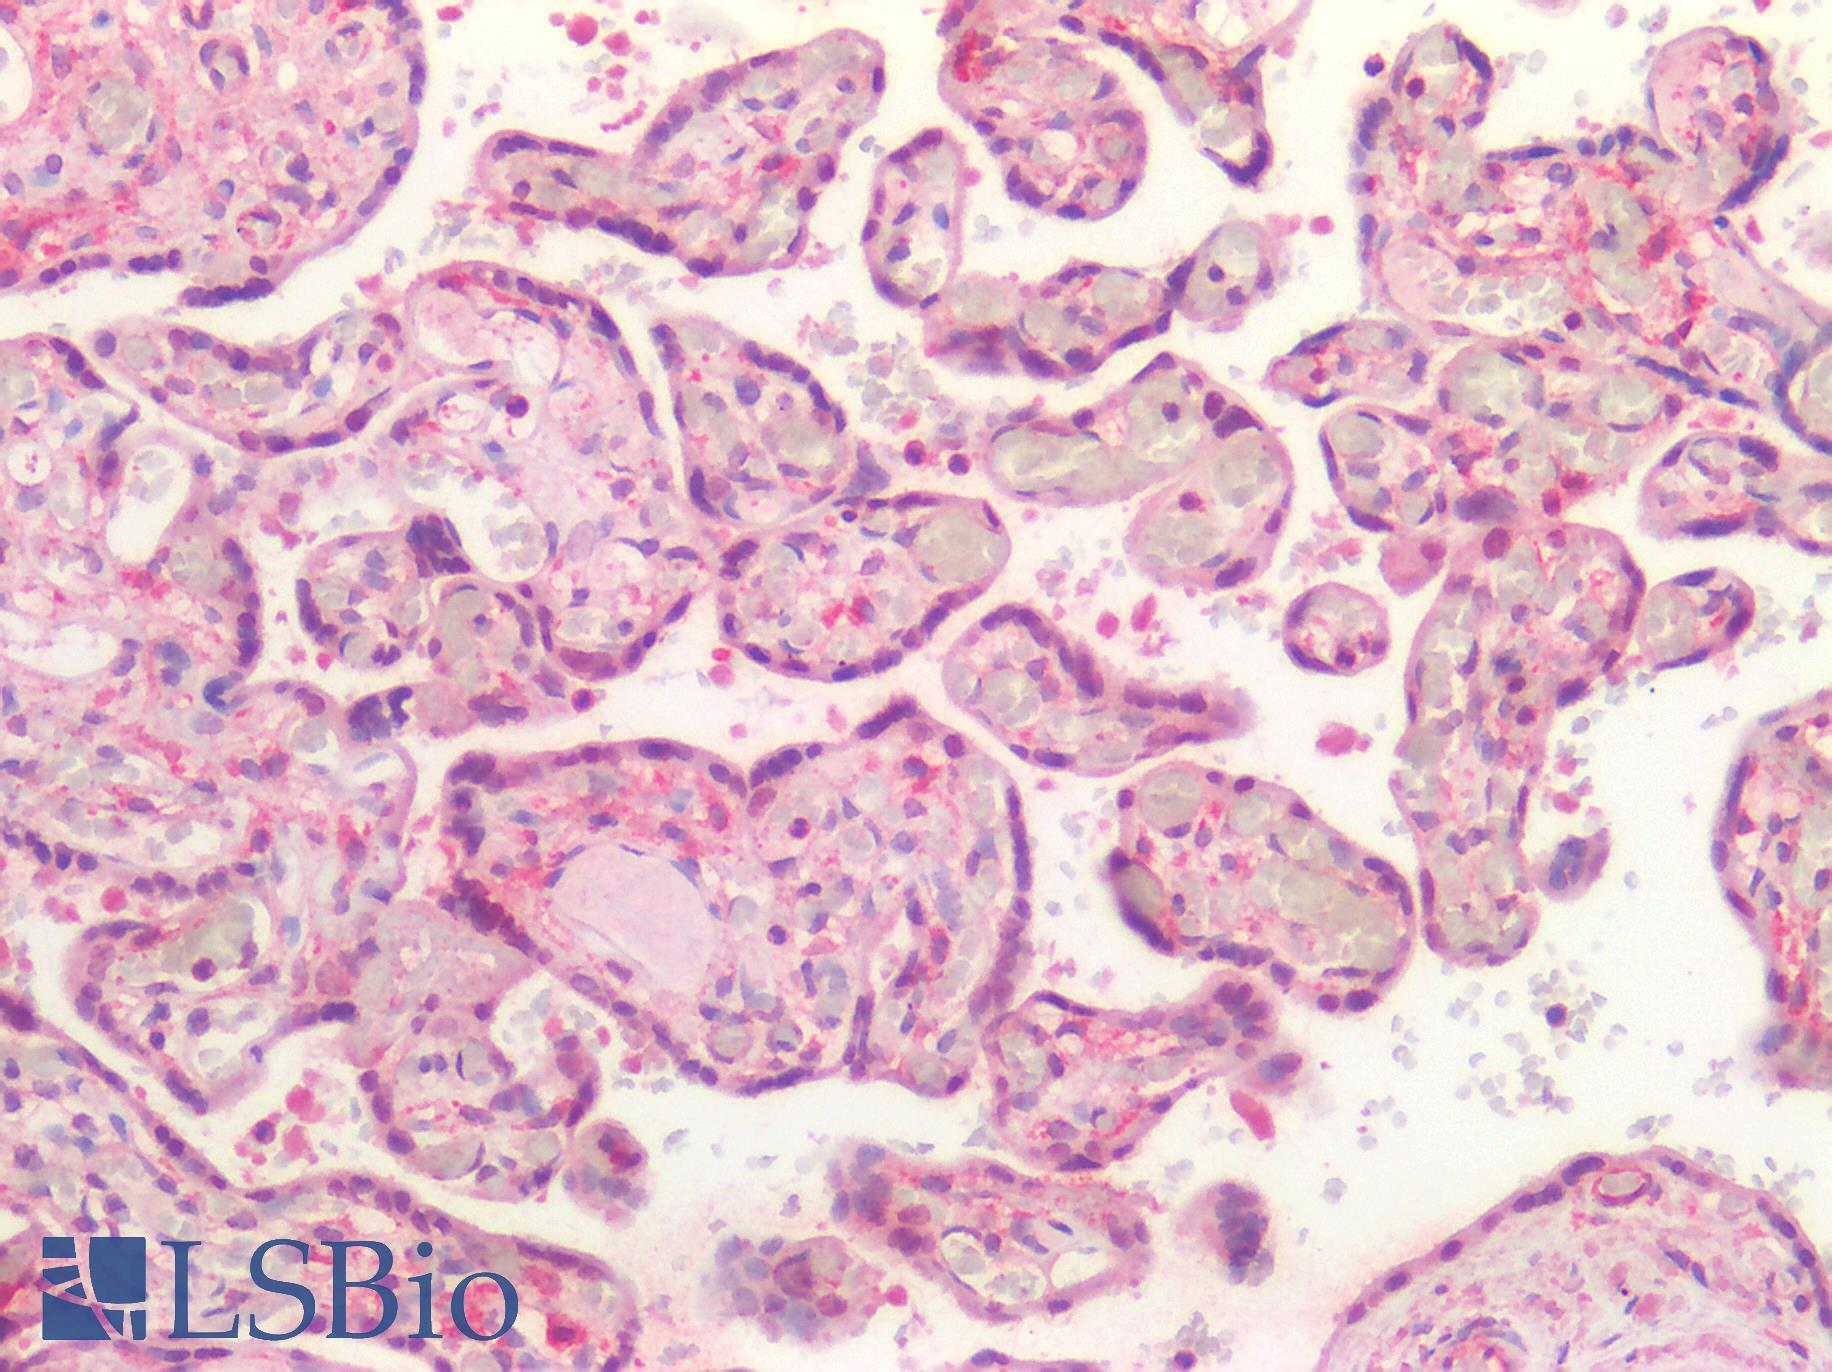 BMP4 Antibody - Human Placenta: Formalin-Fixed, Paraffin-Embedded (FFPE)